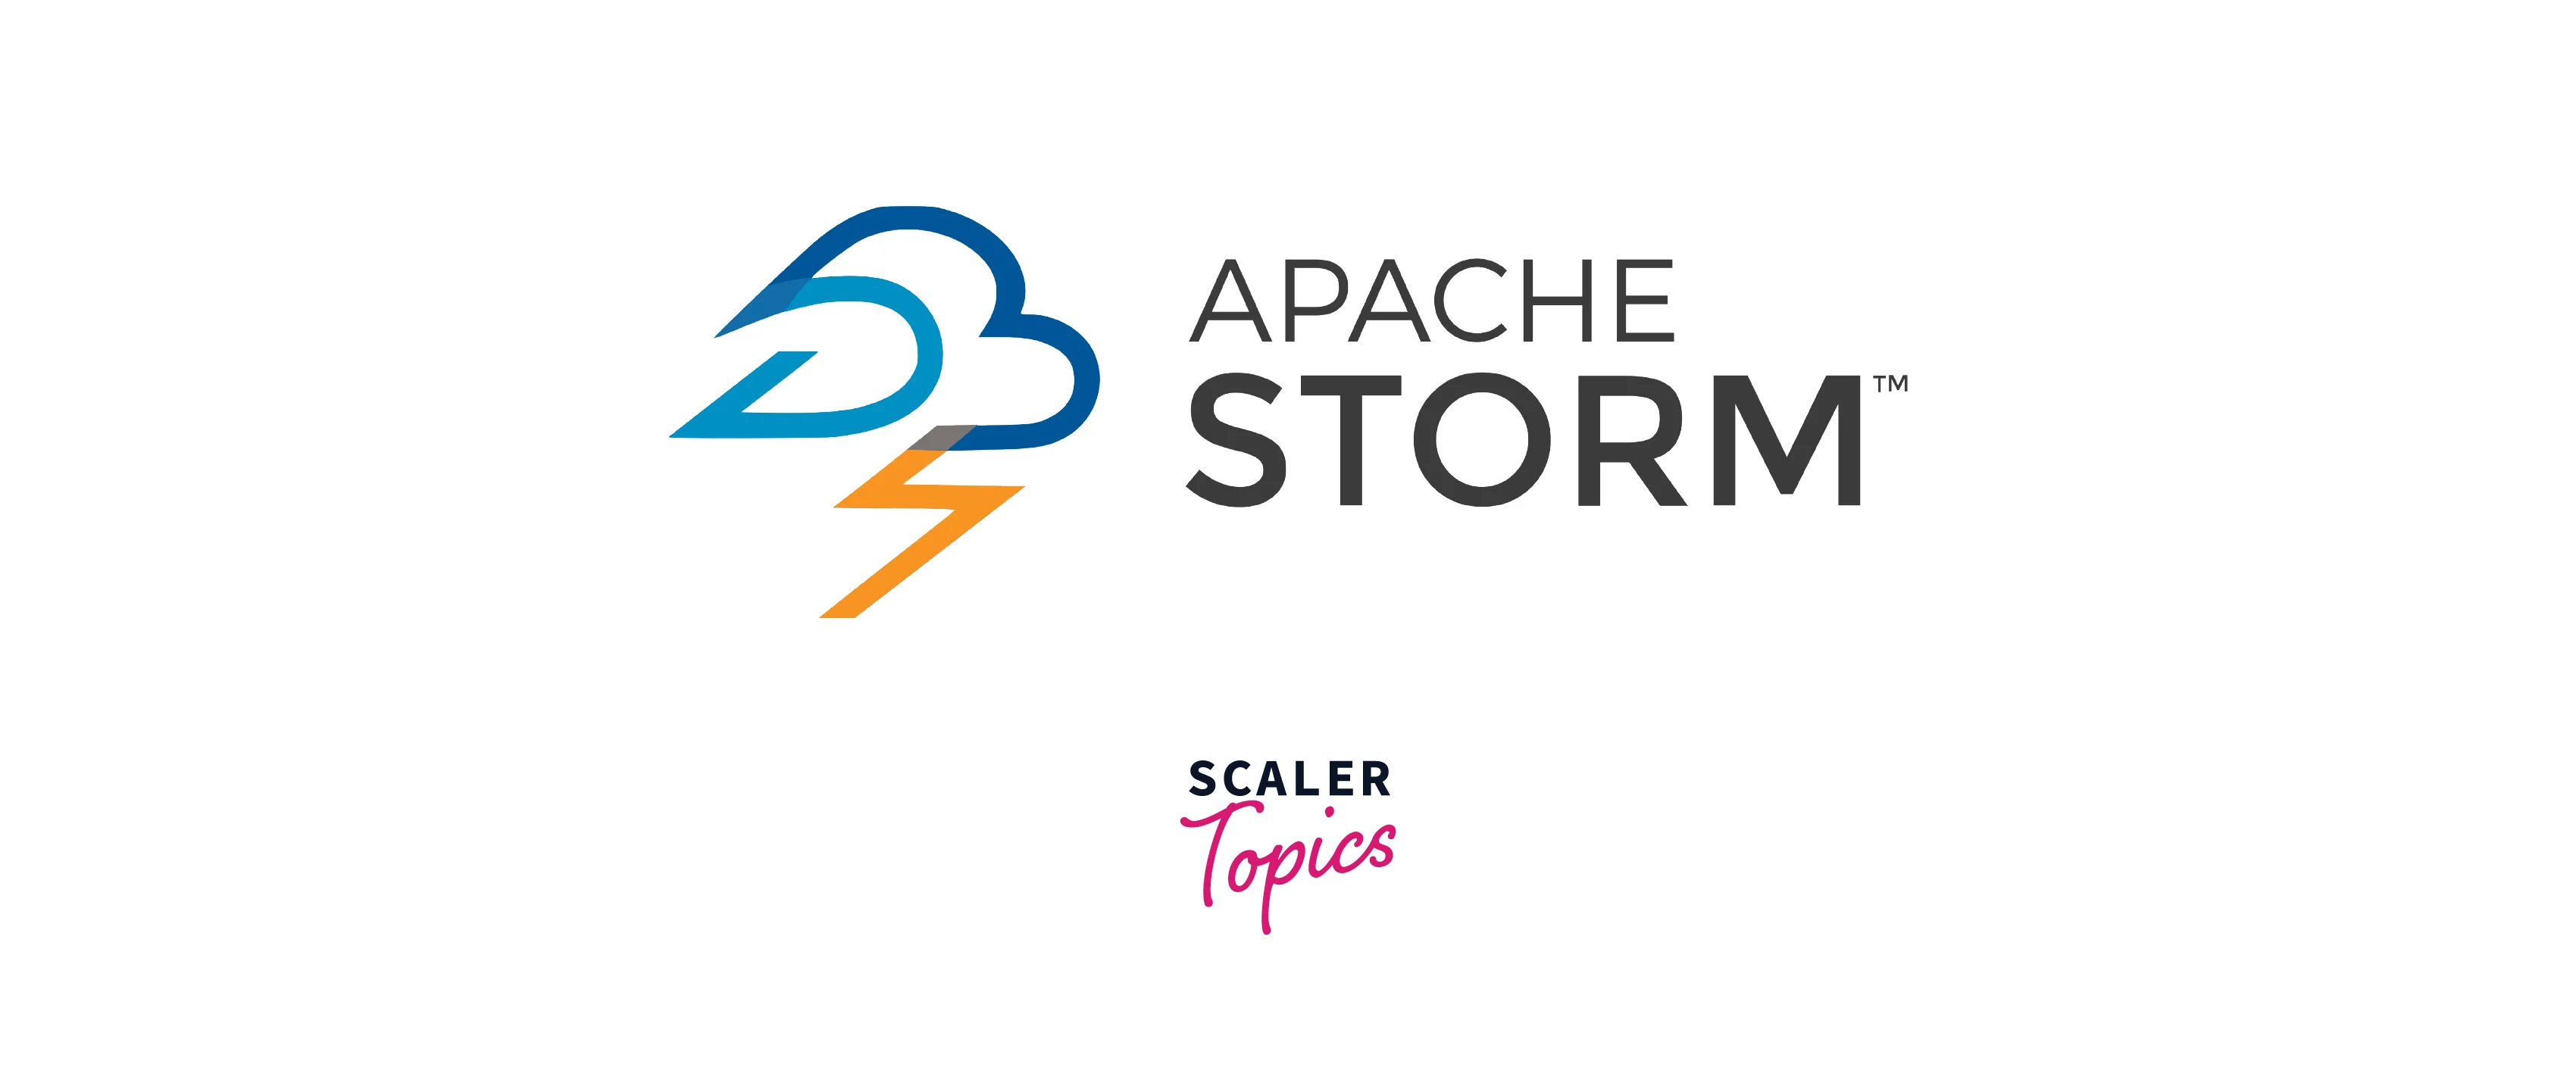 big data analytics tool apache storm